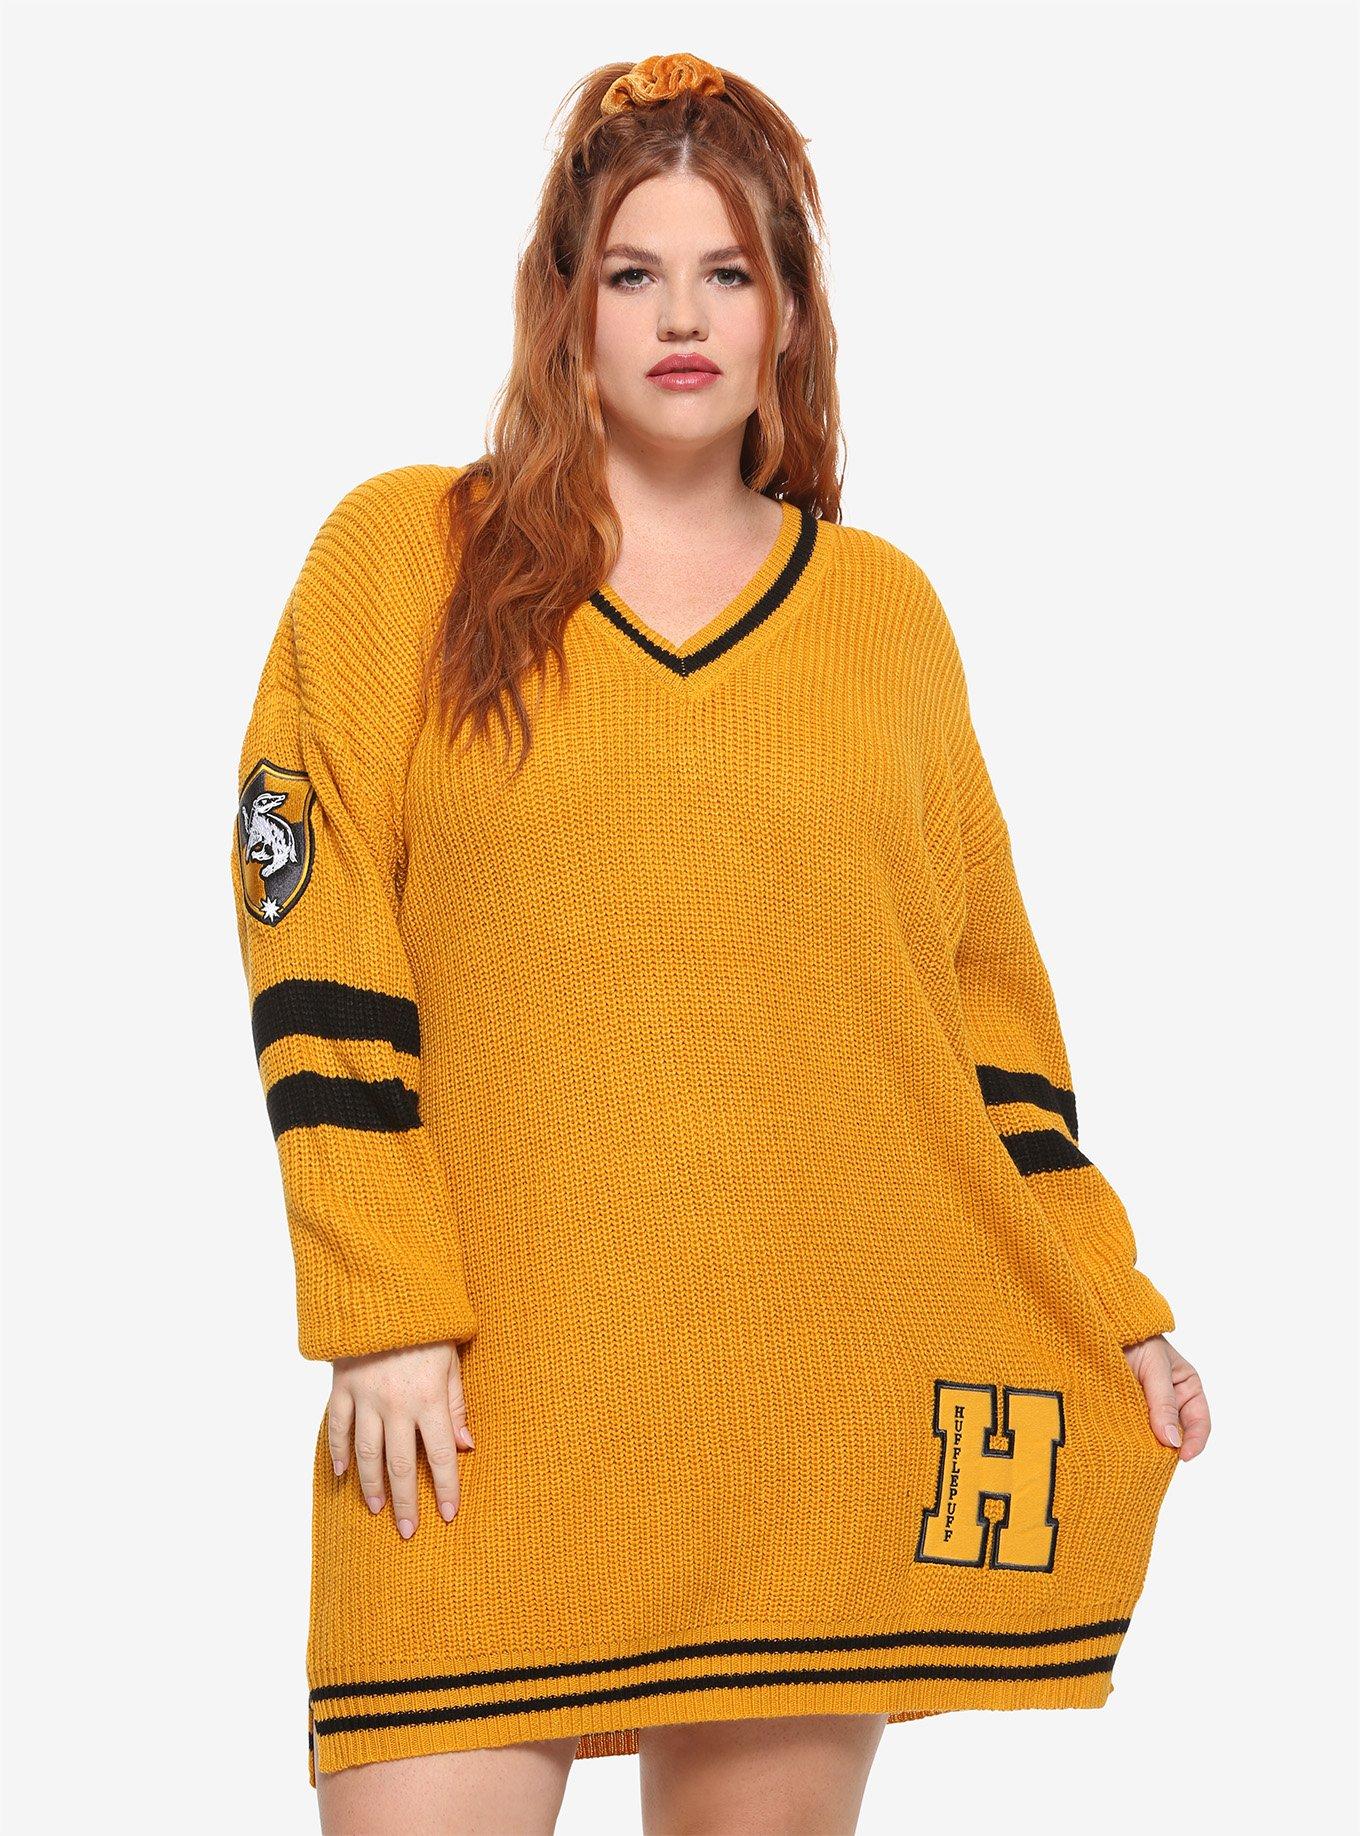 Harry Potter Hufflepuff Sweater Dress Plus Size | Hot Topic